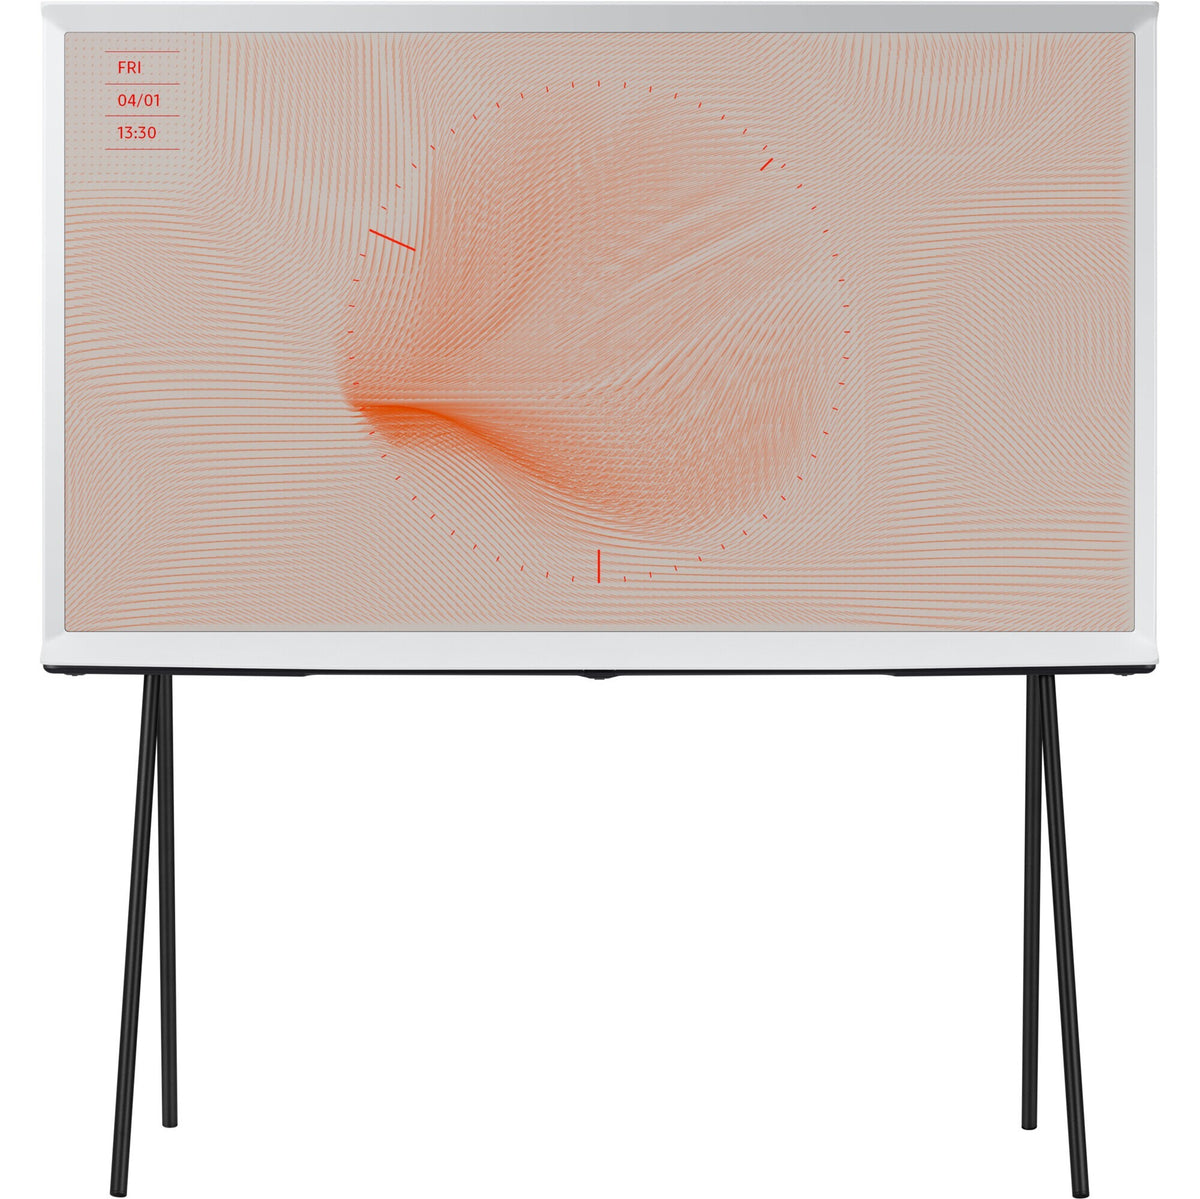 Smart televízor Samsung QE43LS01T (2020) / 43" (108 cm)